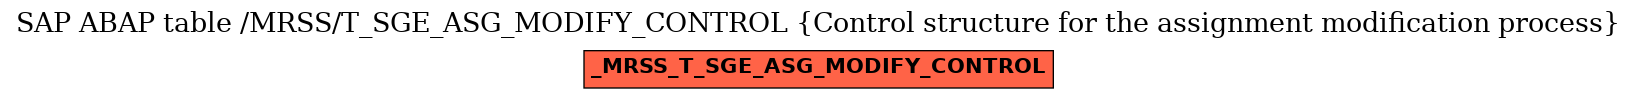 E-R Diagram for table /MRSS/T_SGE_ASG_MODIFY_CONTROL (Control structure for the assignment modification process)